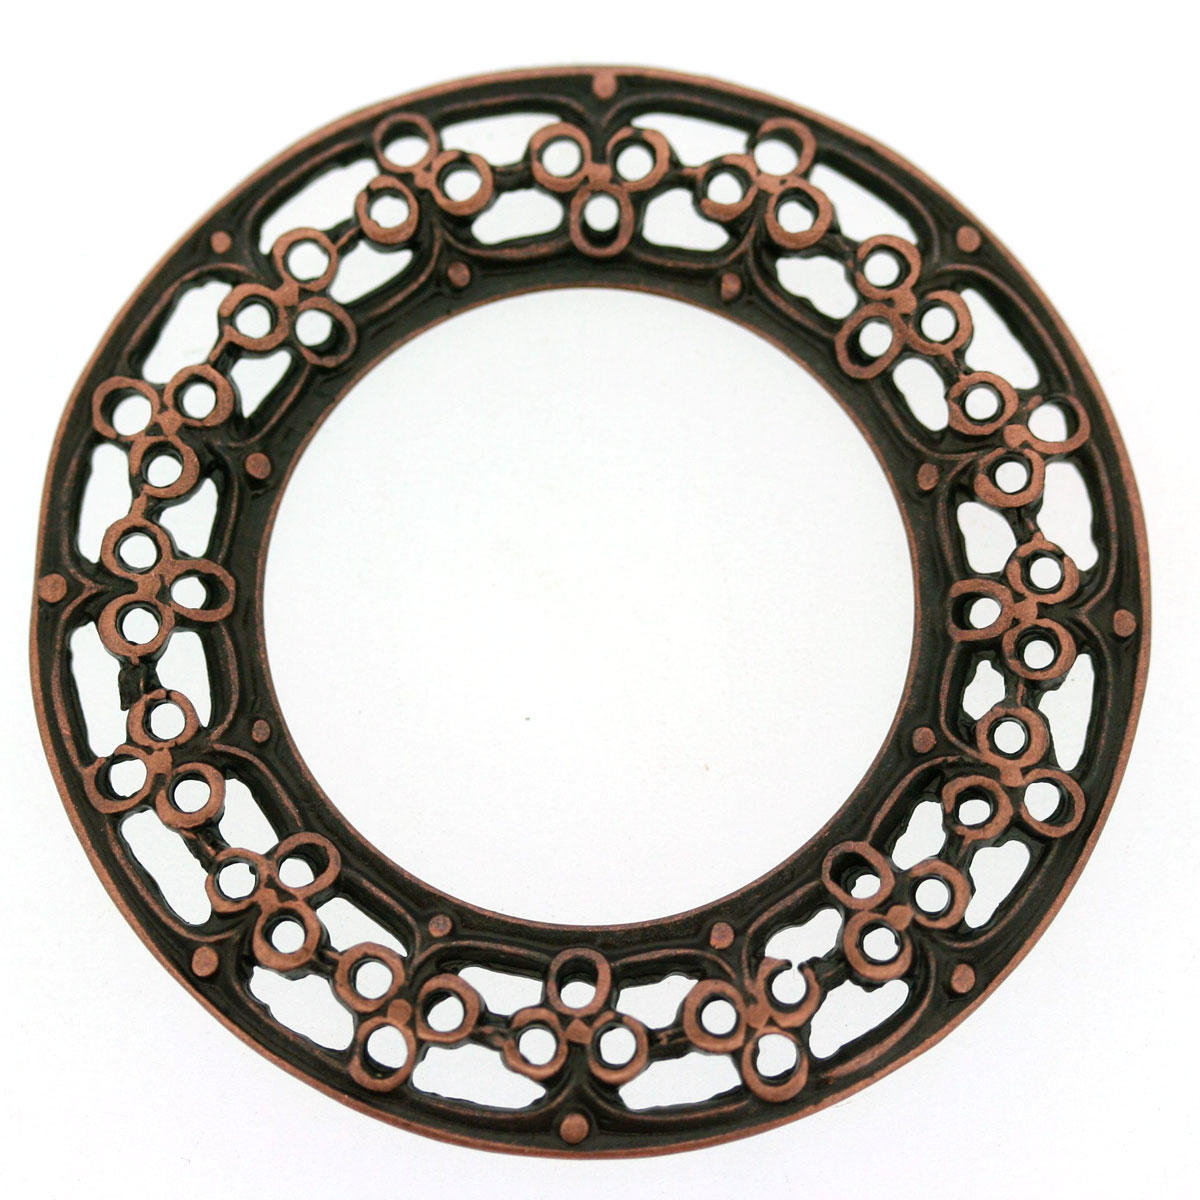 Antique Copper Large Patterned Ring